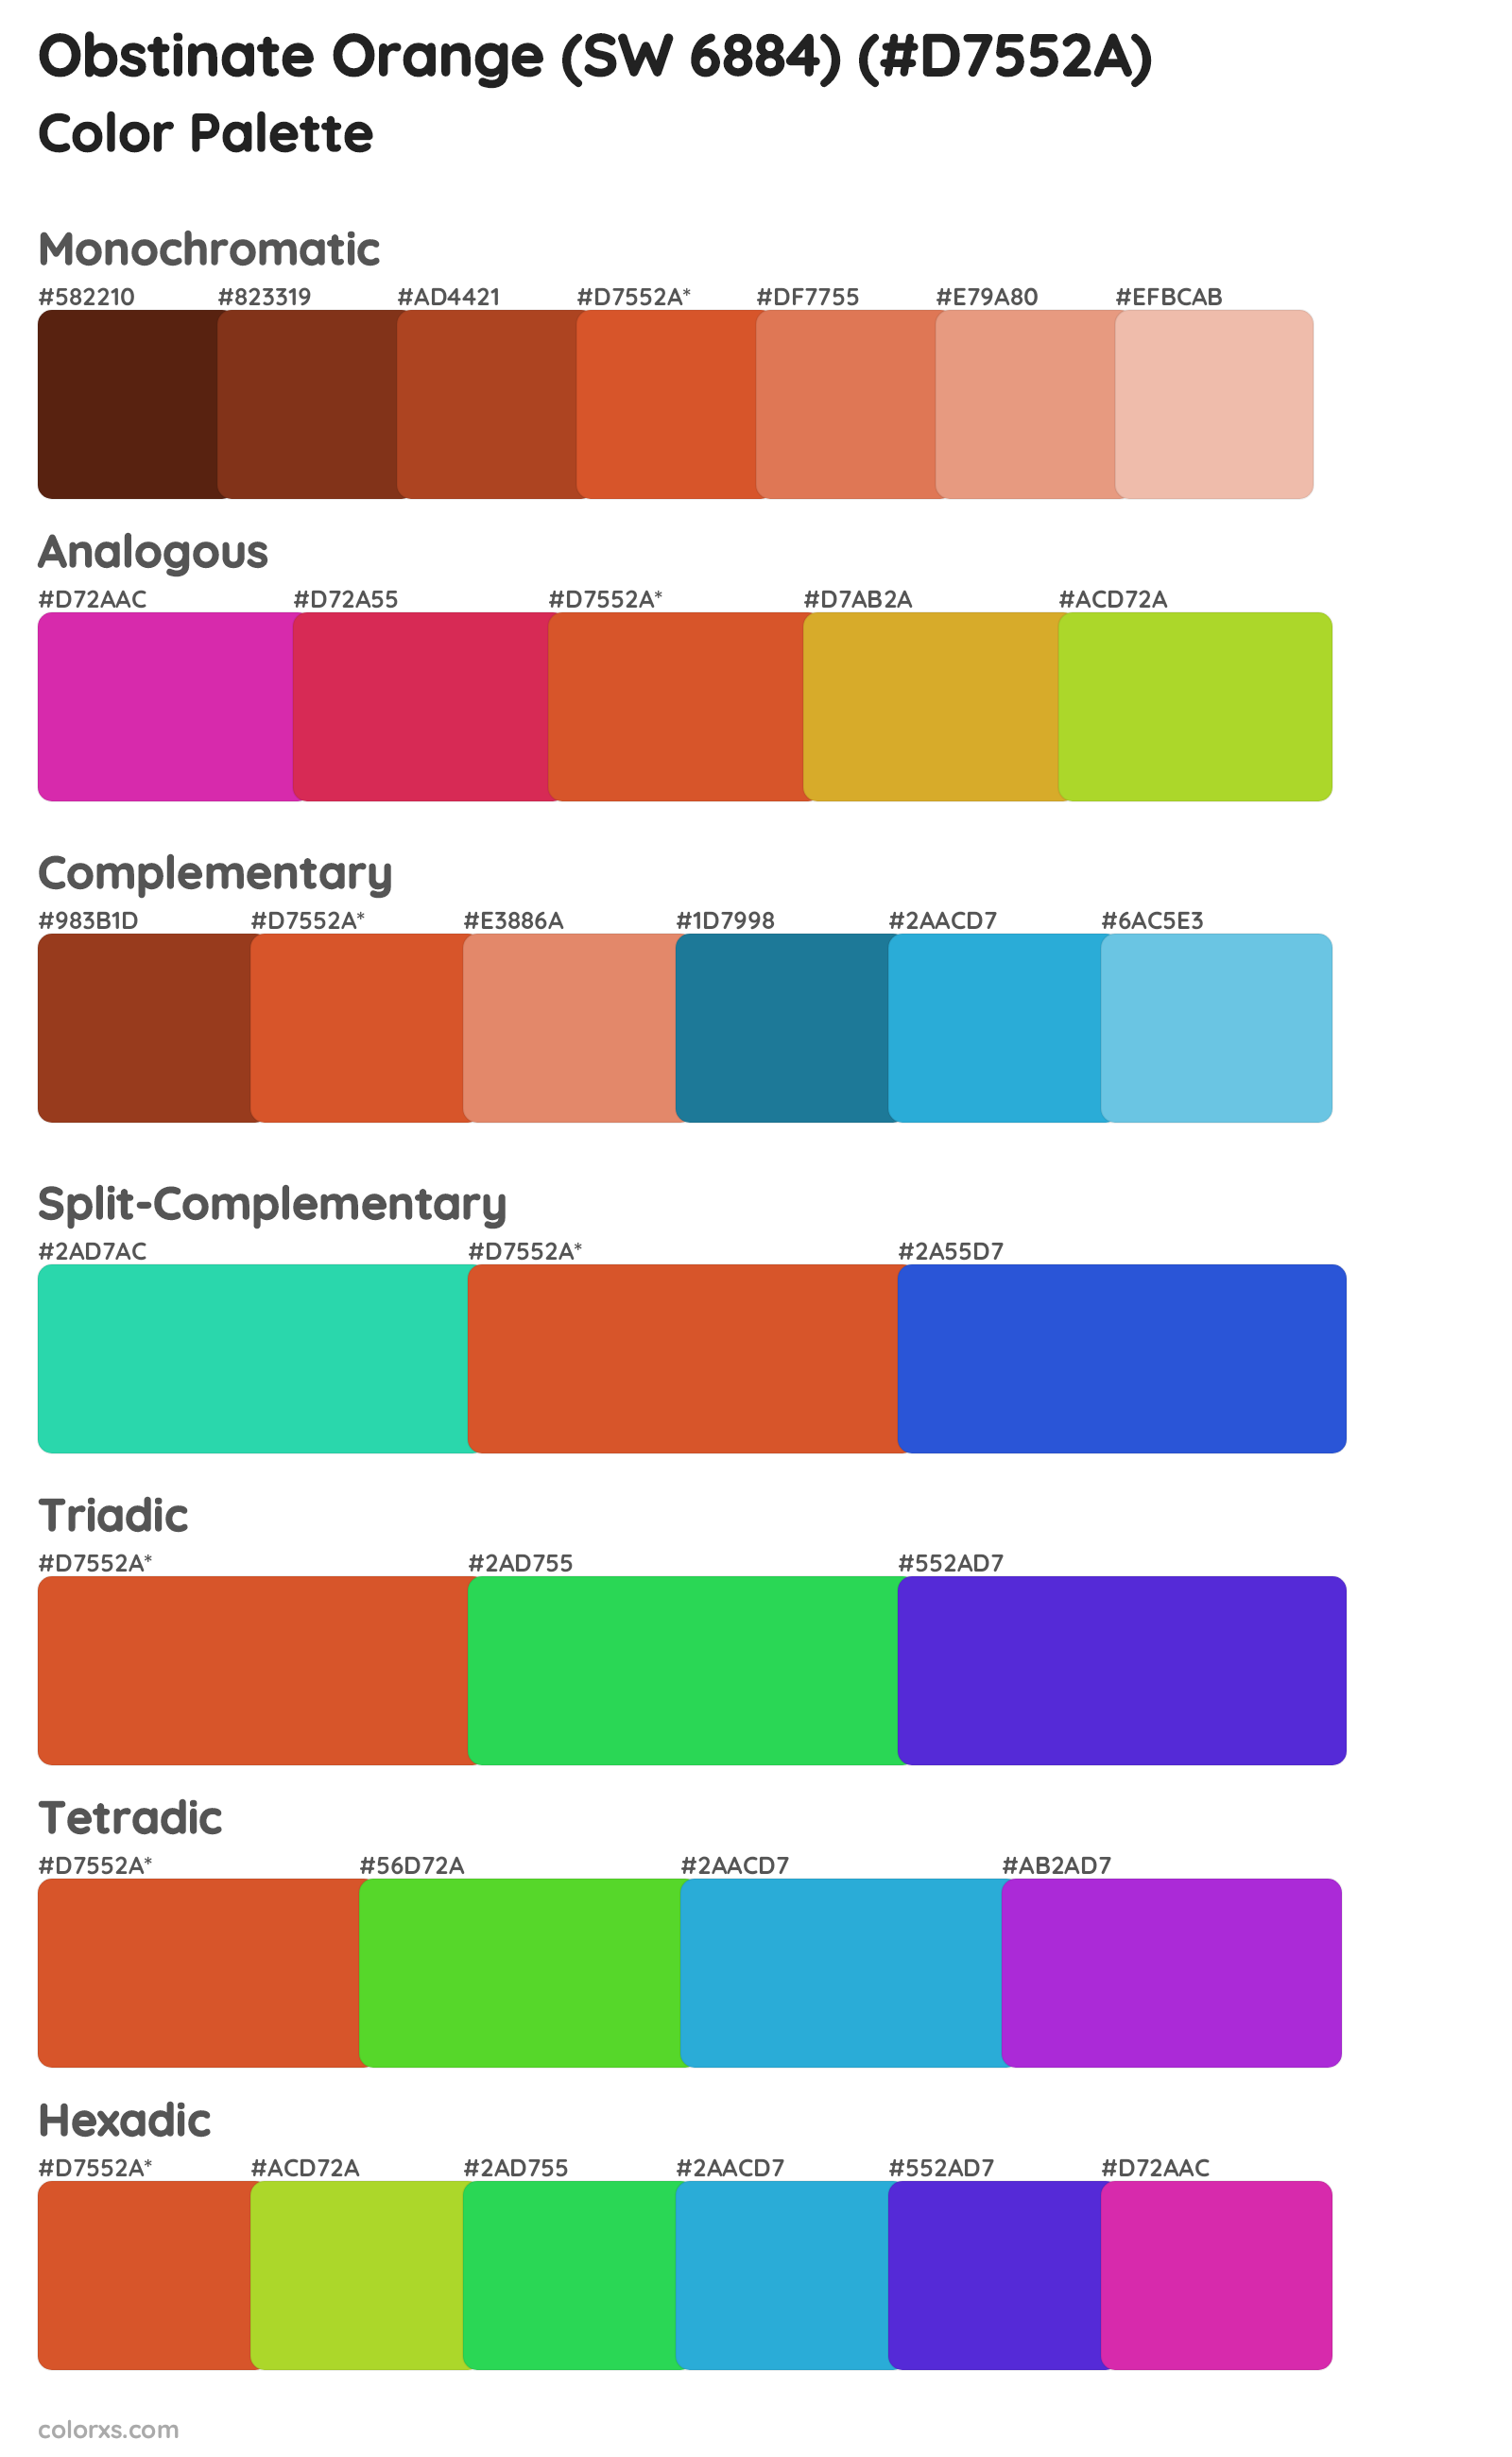 Obstinate Orange (SW 6884) Color Scheme Palettes